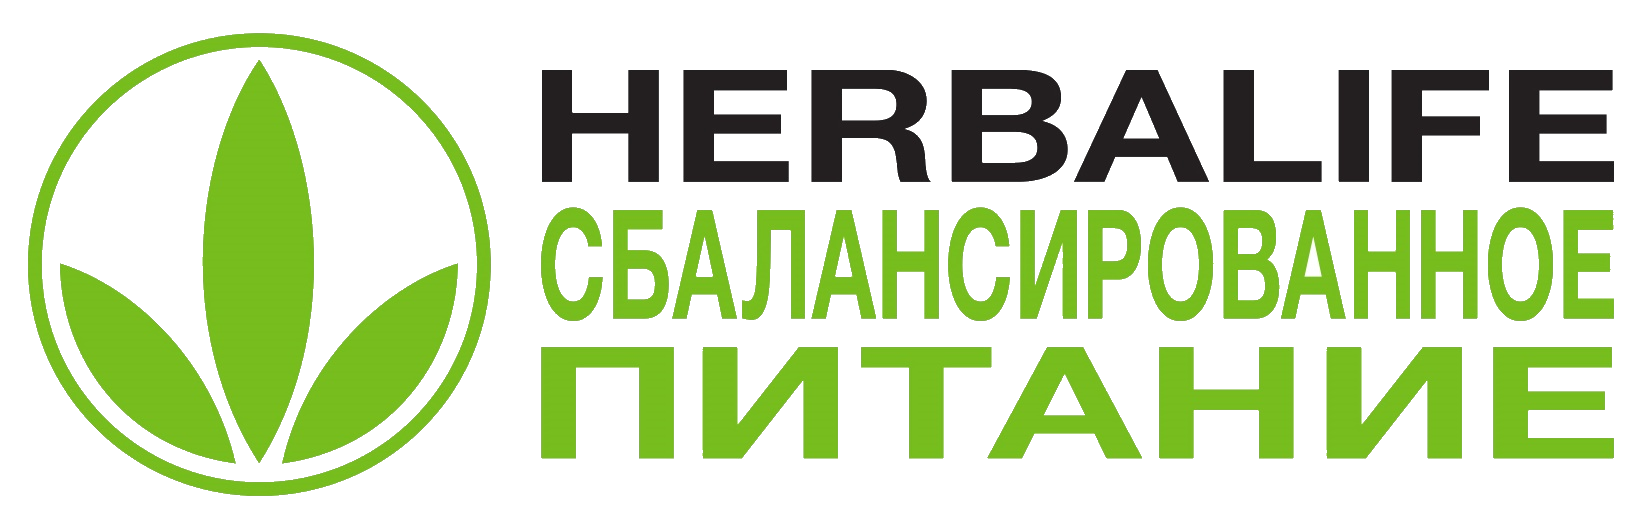 Herbalife Nutrition Logo Transparent - Herbalife Logo Transparent